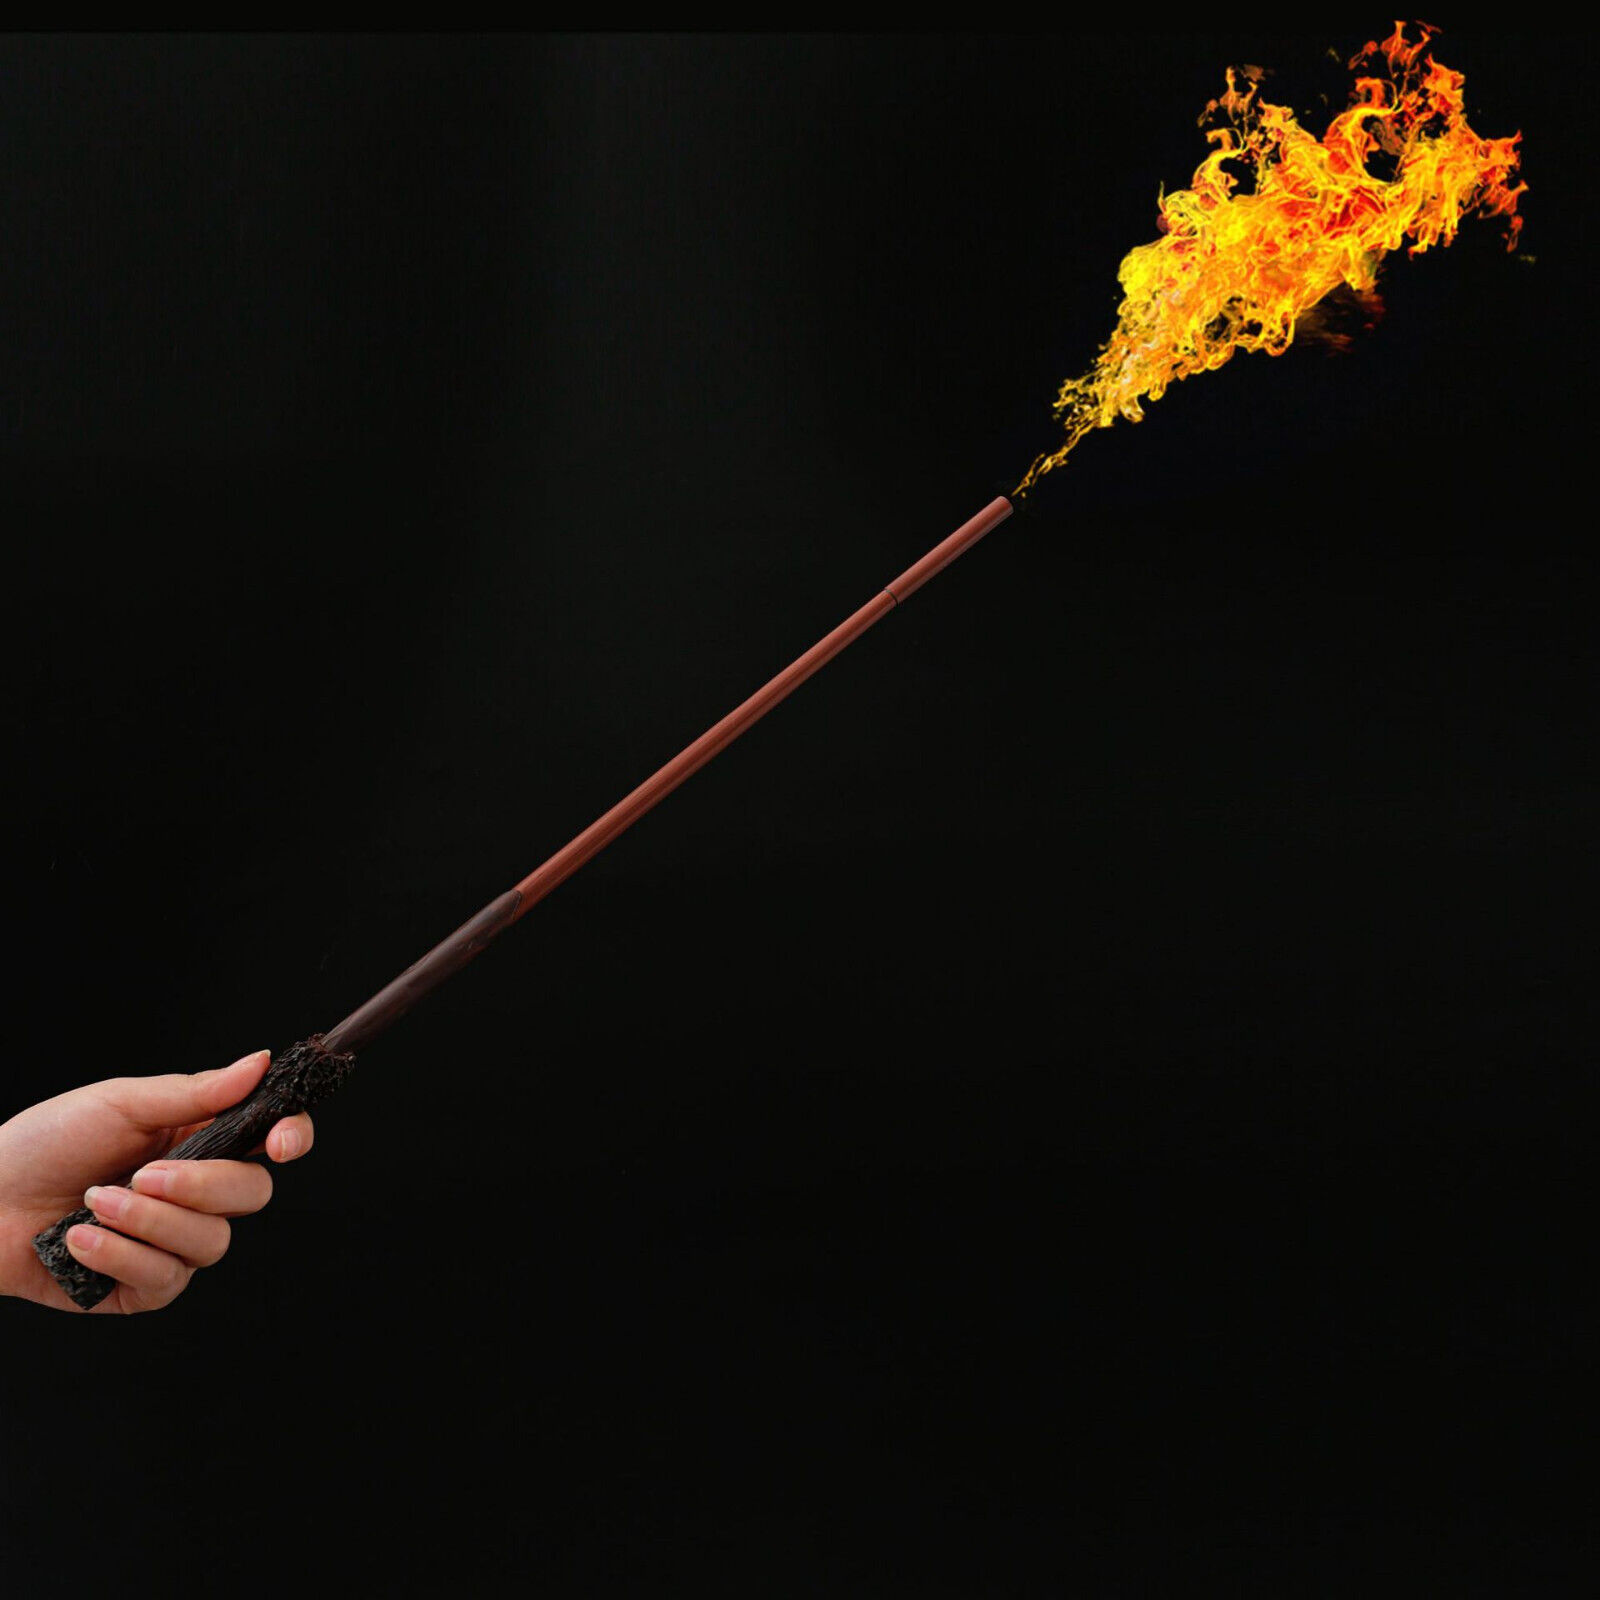 Harry Potter Fireball Wand Wizard Magic Wand Fireballs Shooting Wand Flame